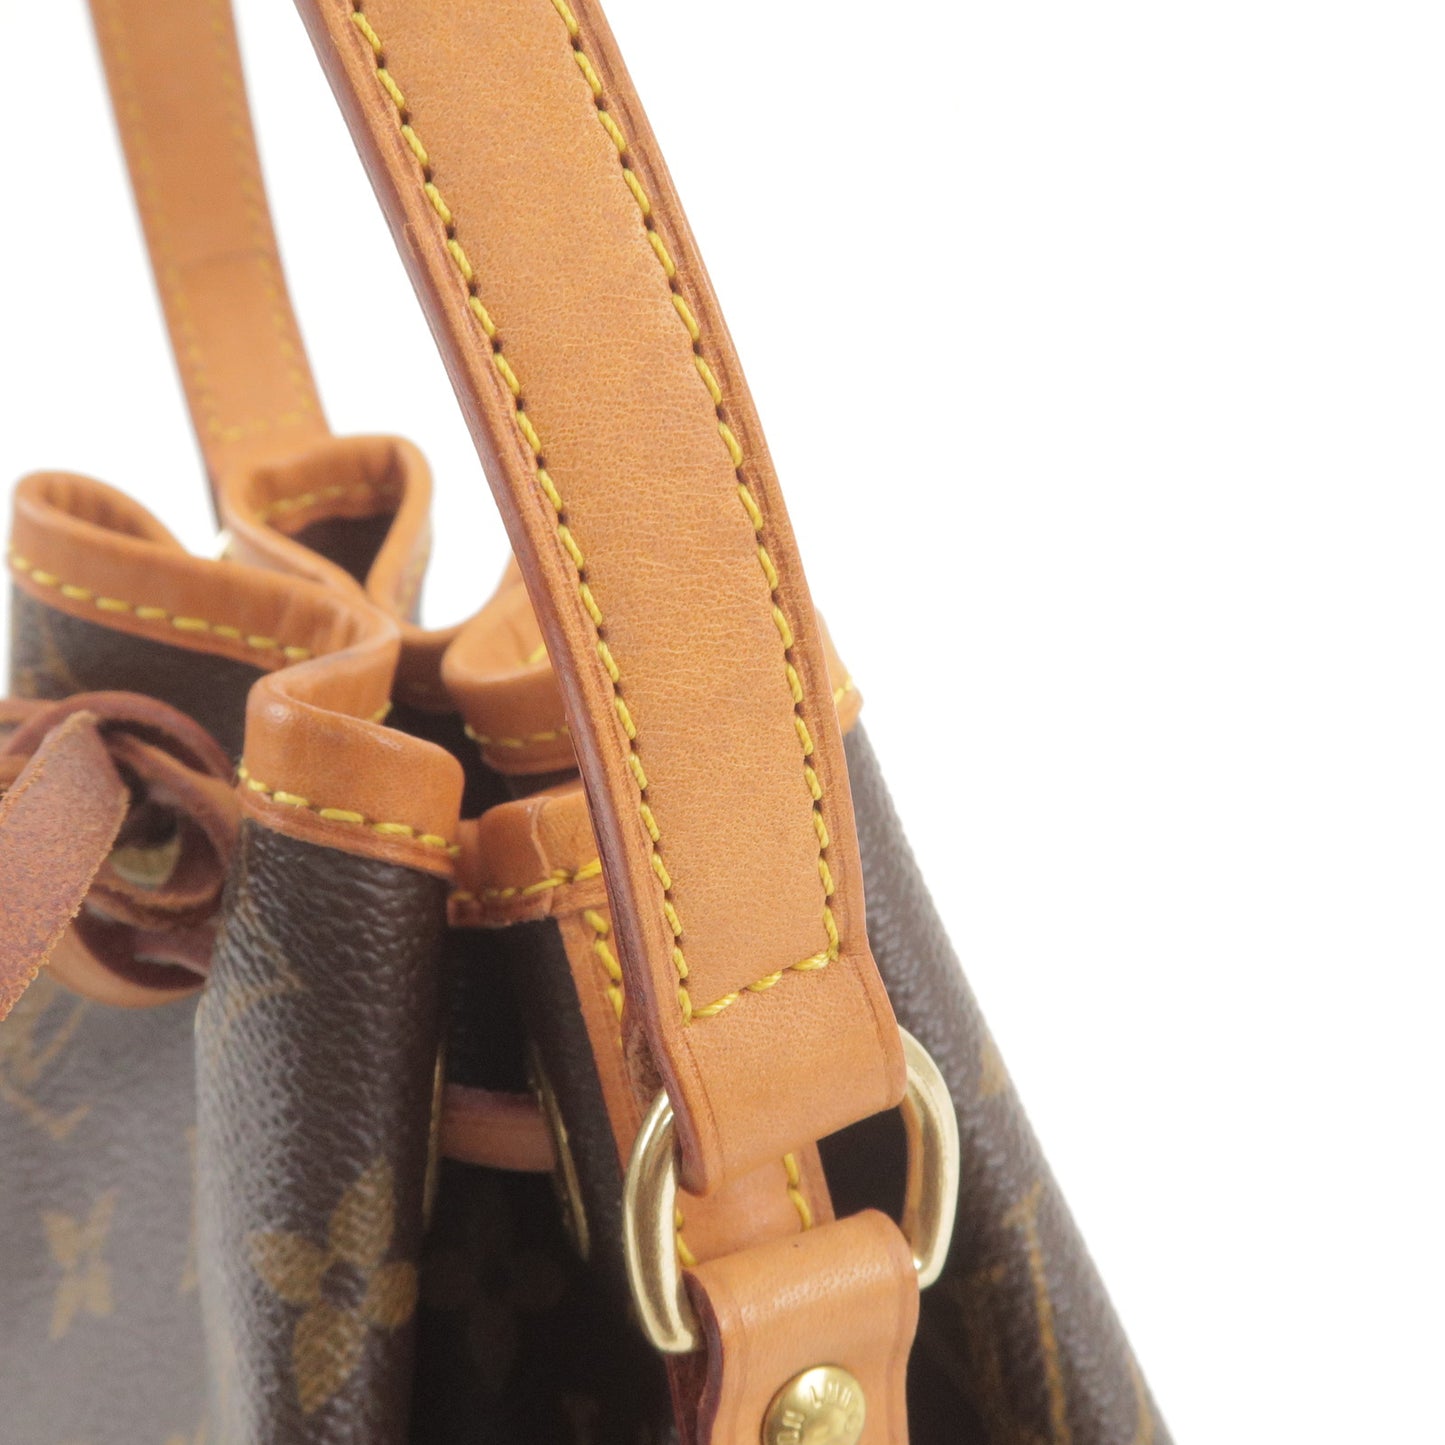 Louis Vuitton Monogram Hand Bag Mini Noe M42227 from Japan